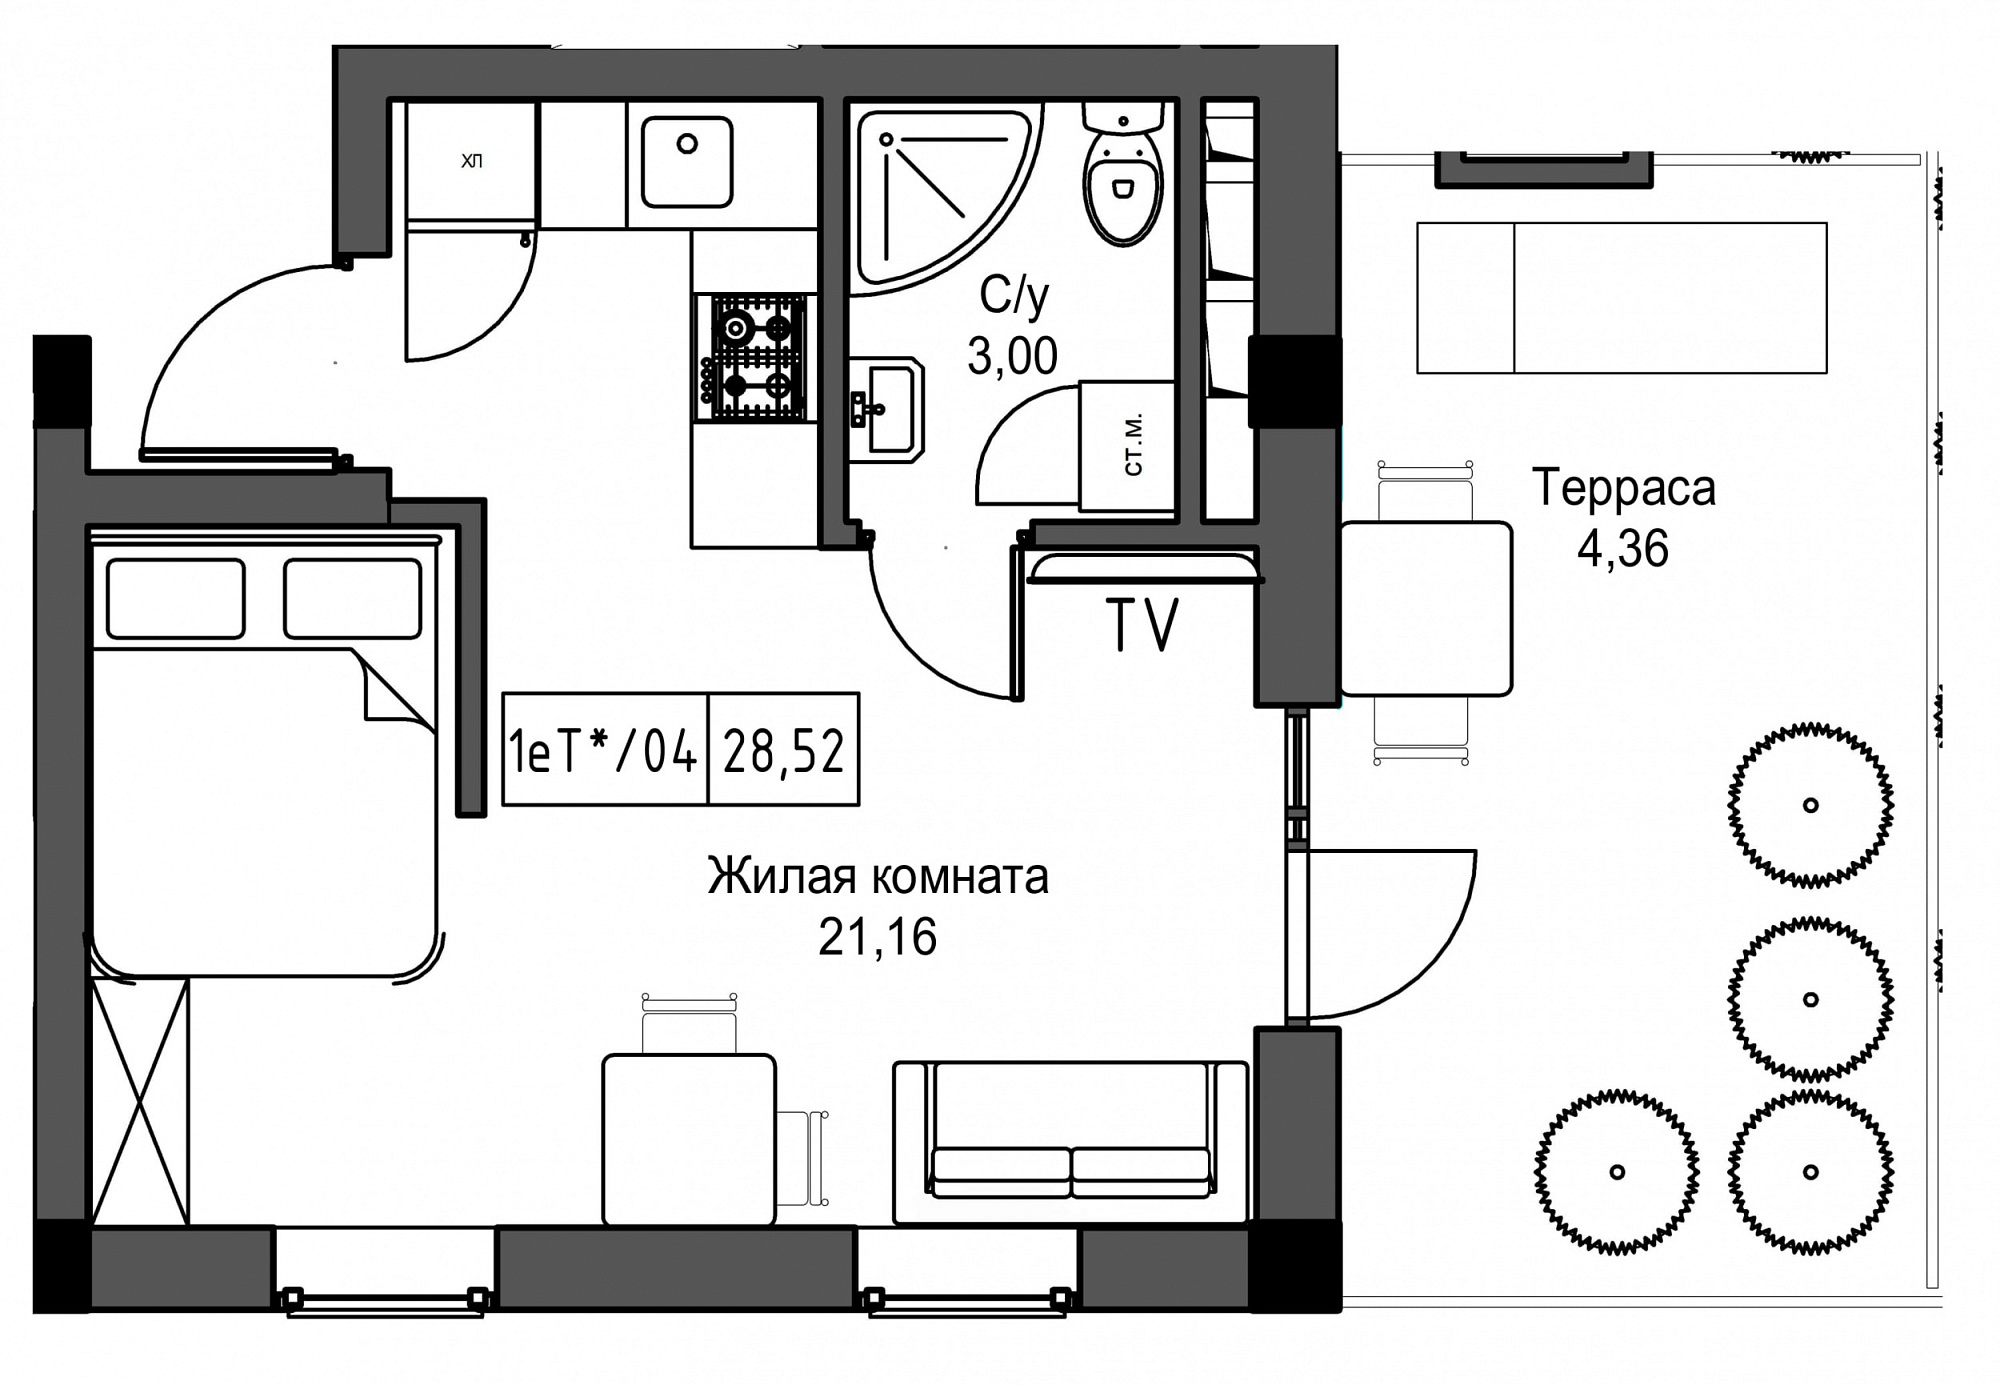 Planning 1-rm flats area 28.52m2, UM-002-05/0045.